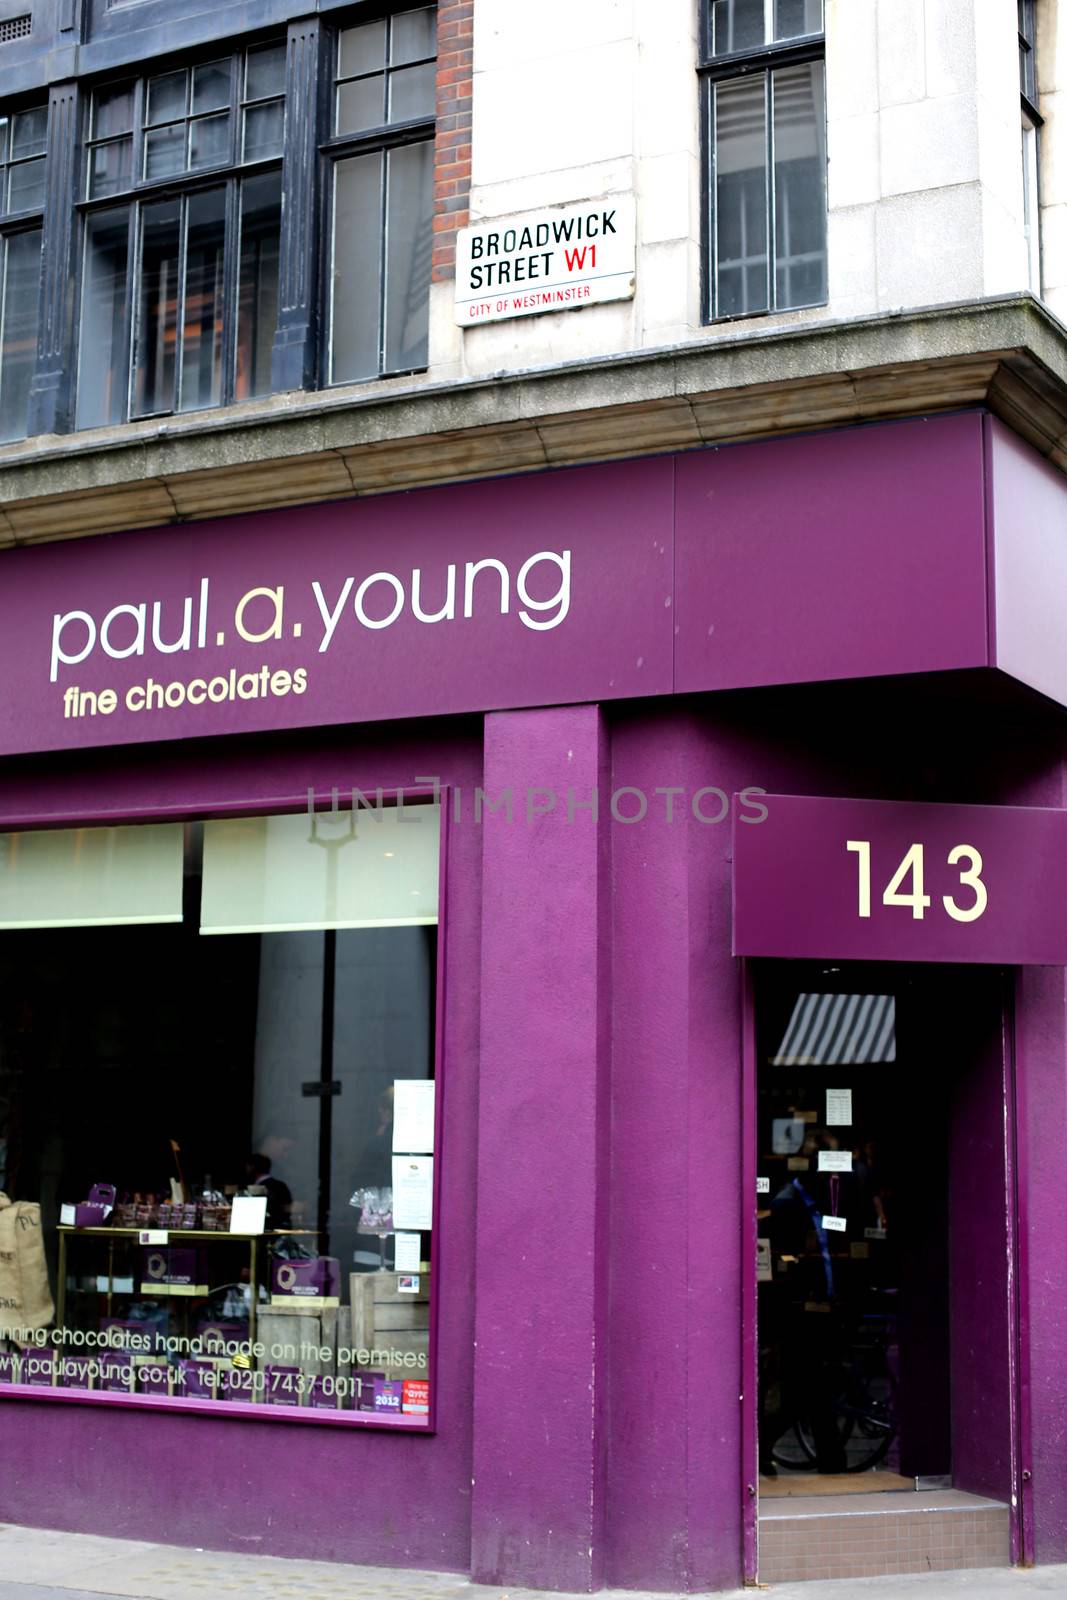 Paul Young Chocolate Shop Broadwick Street London by Whiteboxmedia